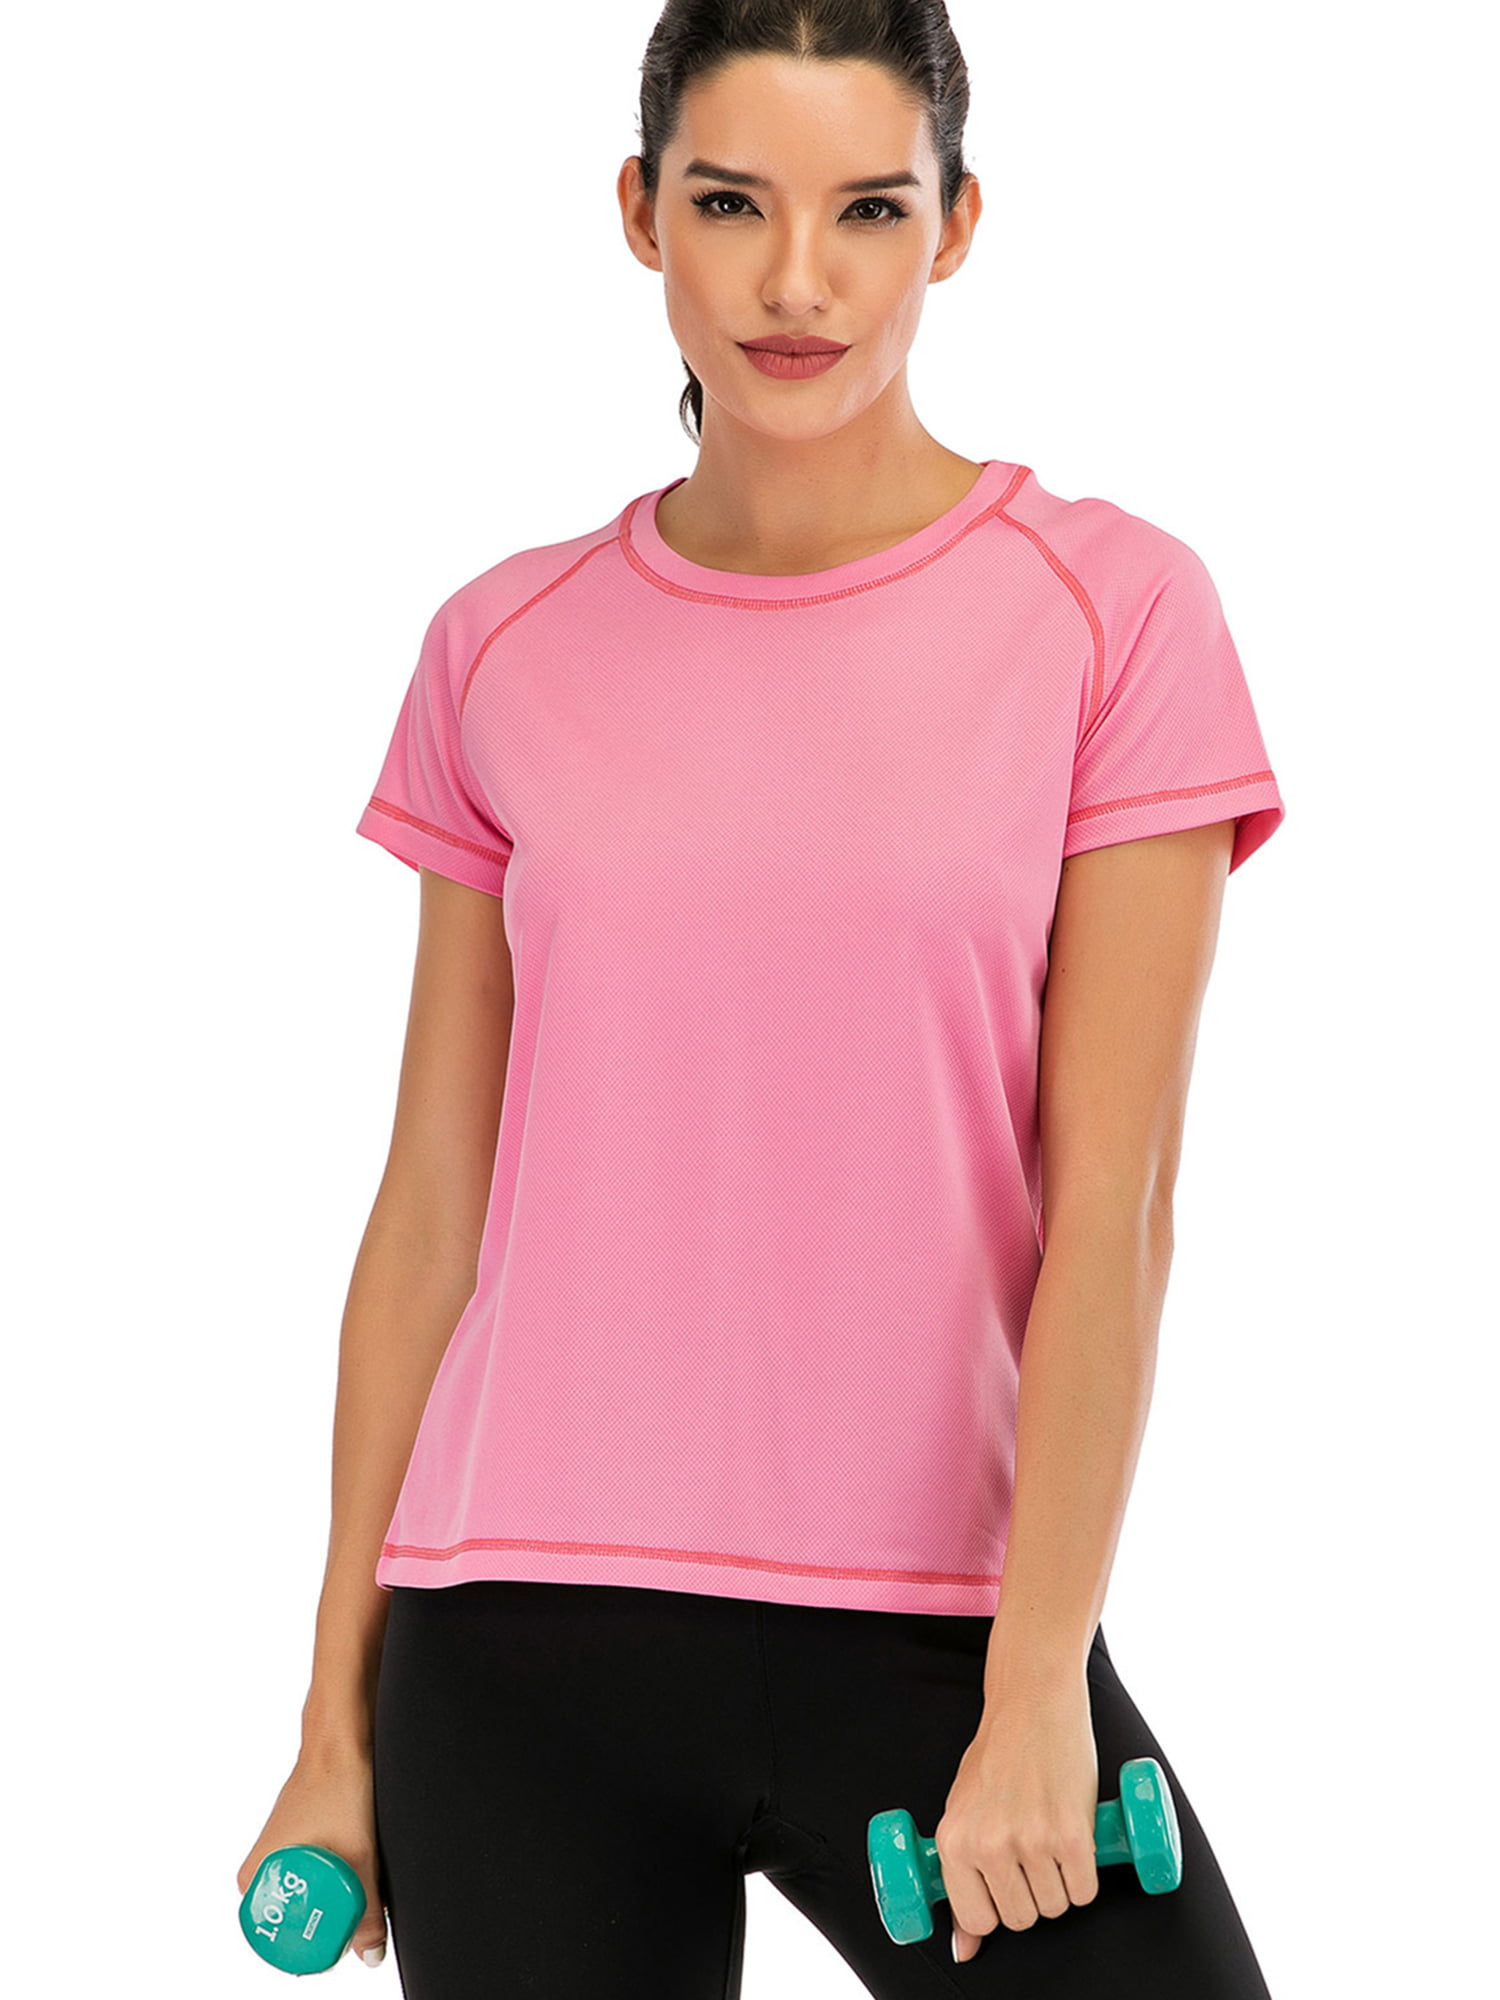 iClosam Women's Short Sleeve Yoga Tops Flowy Fitness Workout T Shirt 